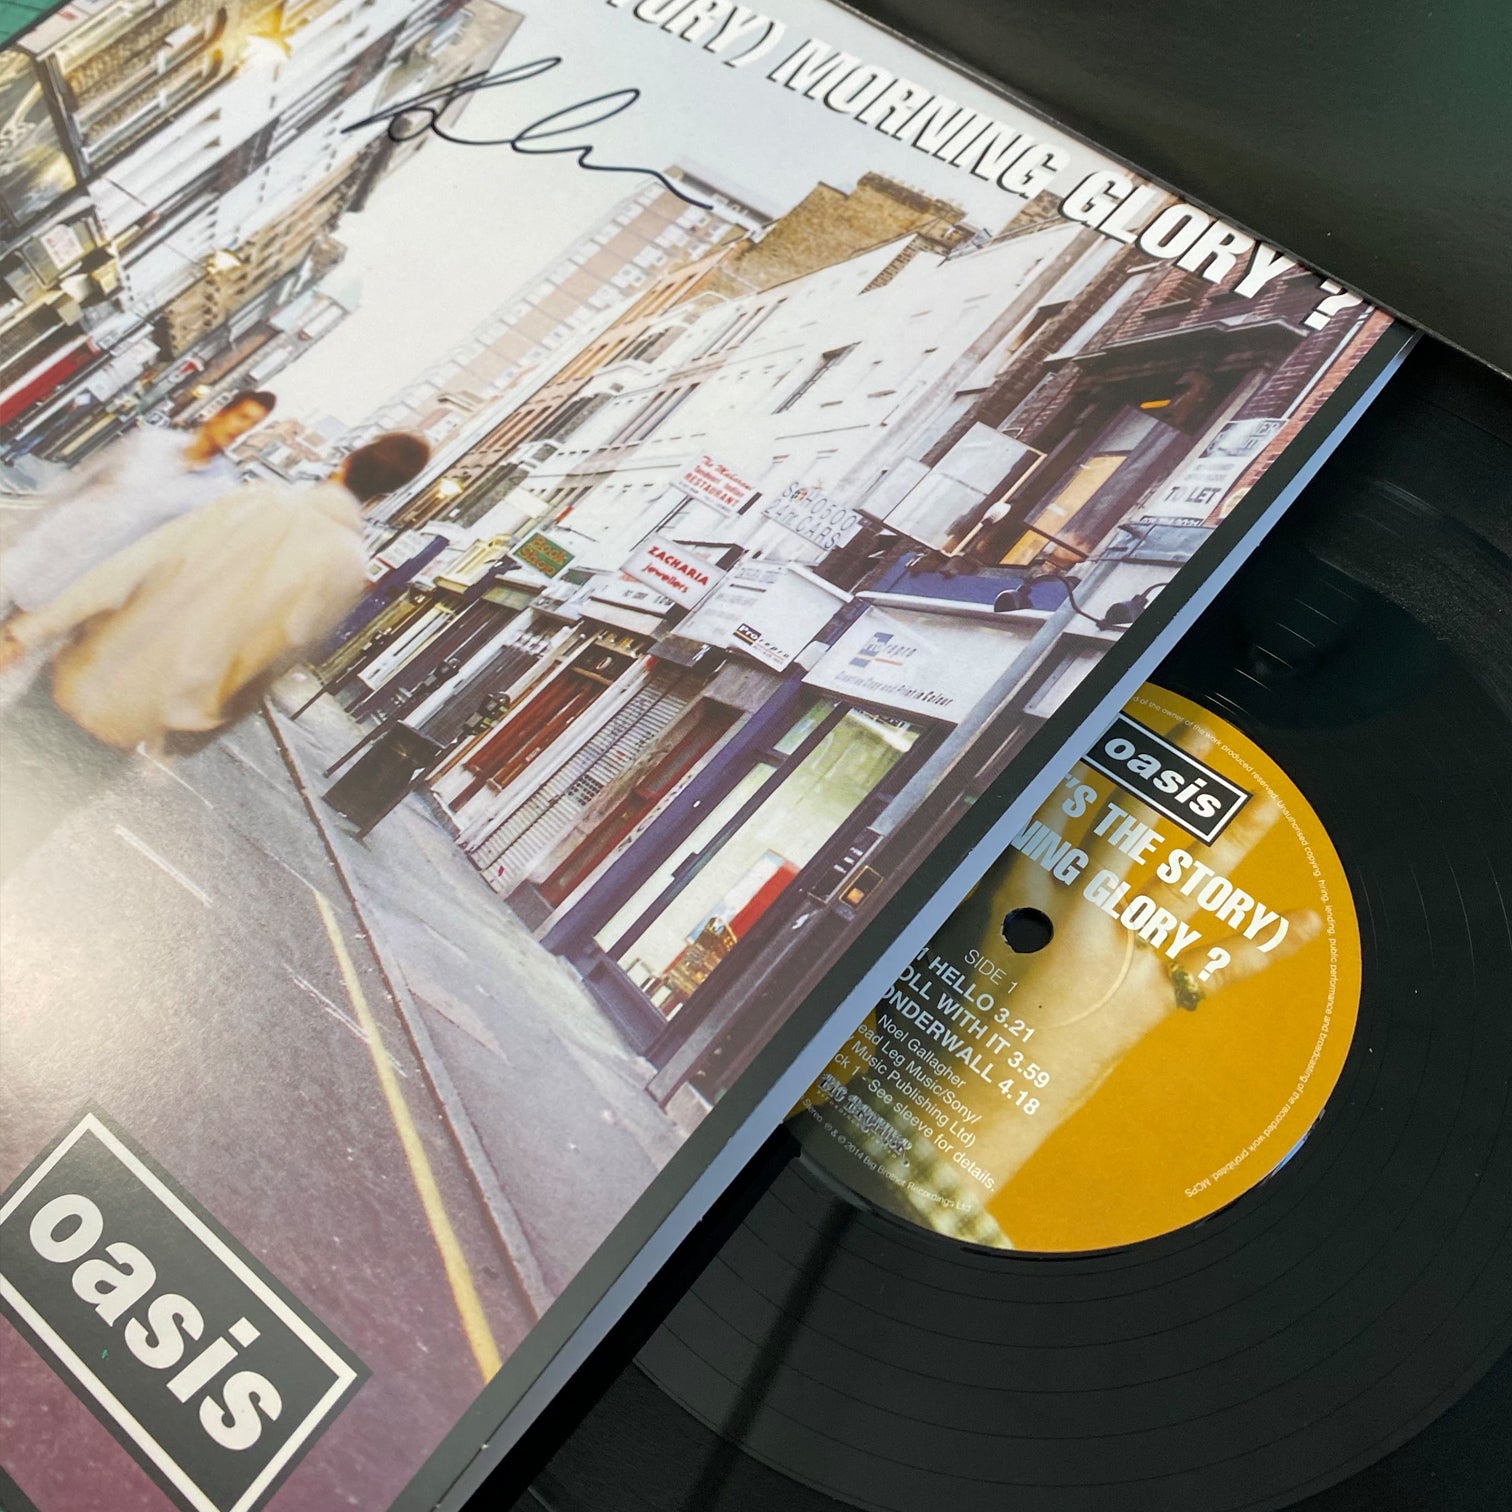 Oasis - Morning Glory - Unplayed Vinyl - Signed - New Item